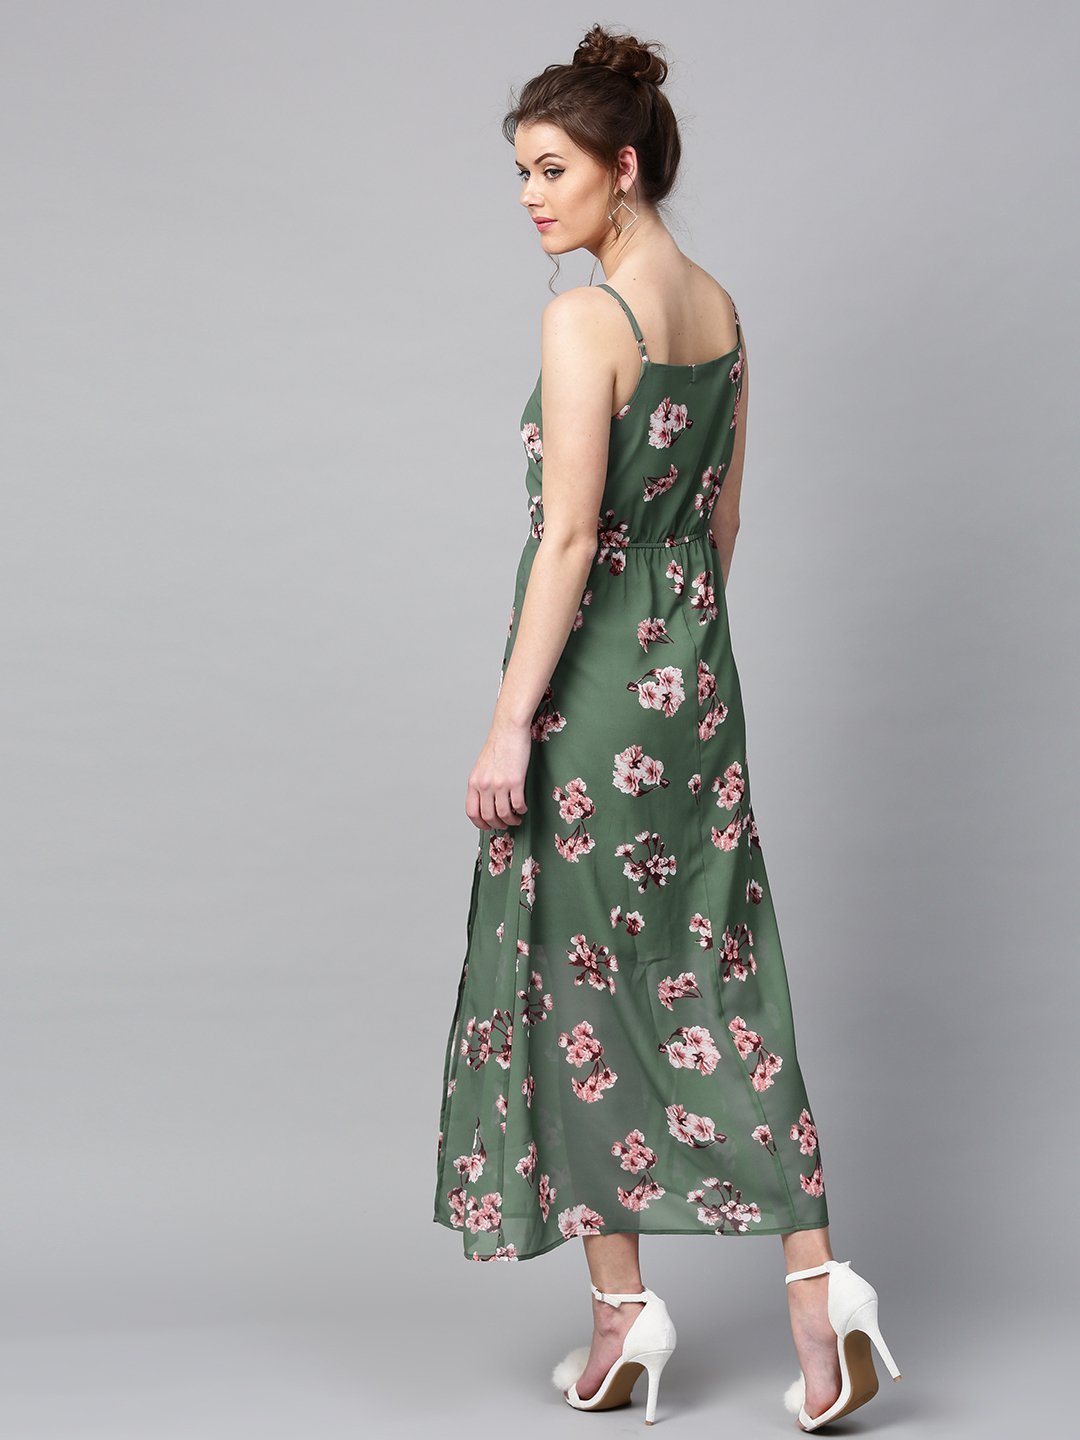 Dress Star - Dress - Floral Printed Maxi Dress - Green And Pink - 11518700866918-SASSAFRAS-Women-Green-Printed-A-Line-Dress-9691518700866752-4_f6c18bb8-9d5a-48c5-8807-62a4f89cea9b